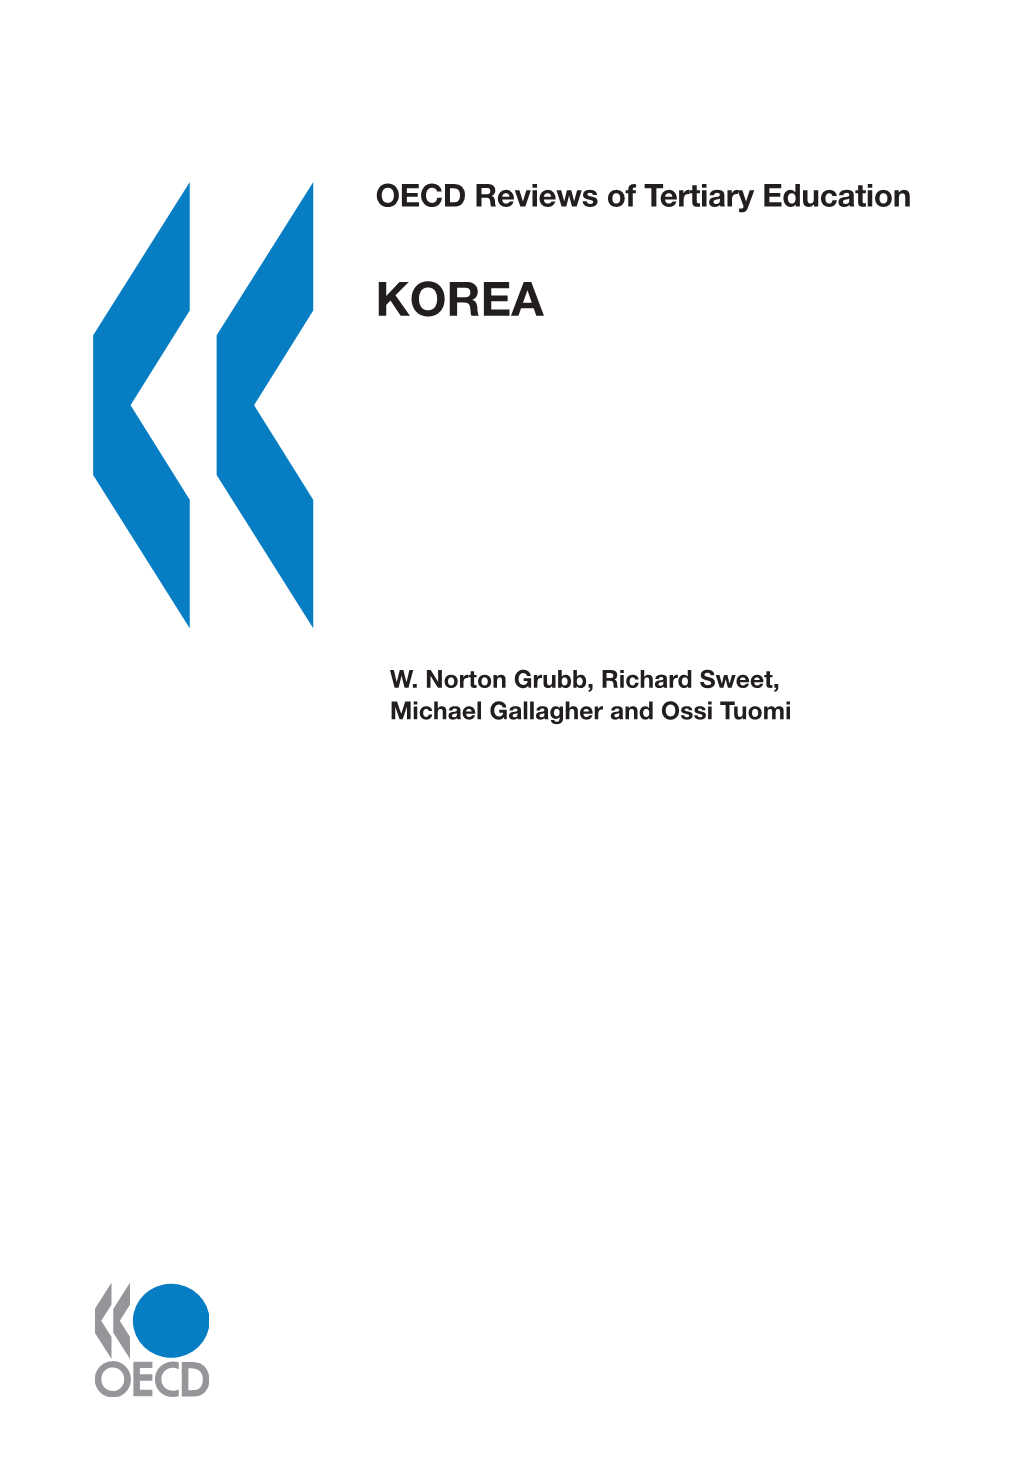 OECD Reviews of Tertiary Education: Korea